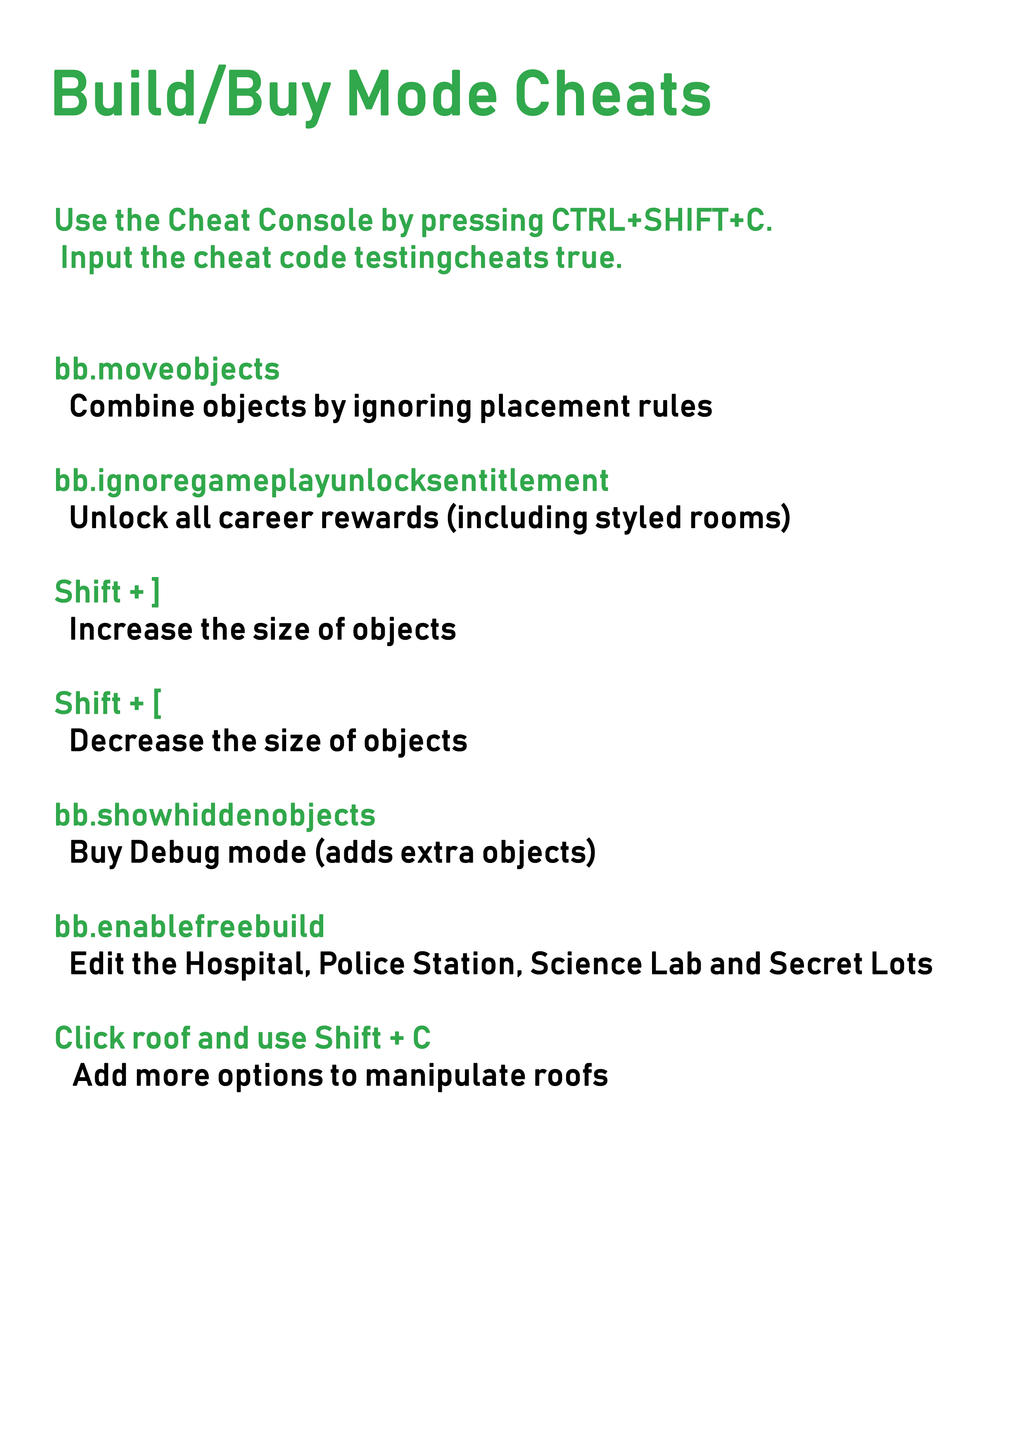 Building cheat sheet : r/Sims4